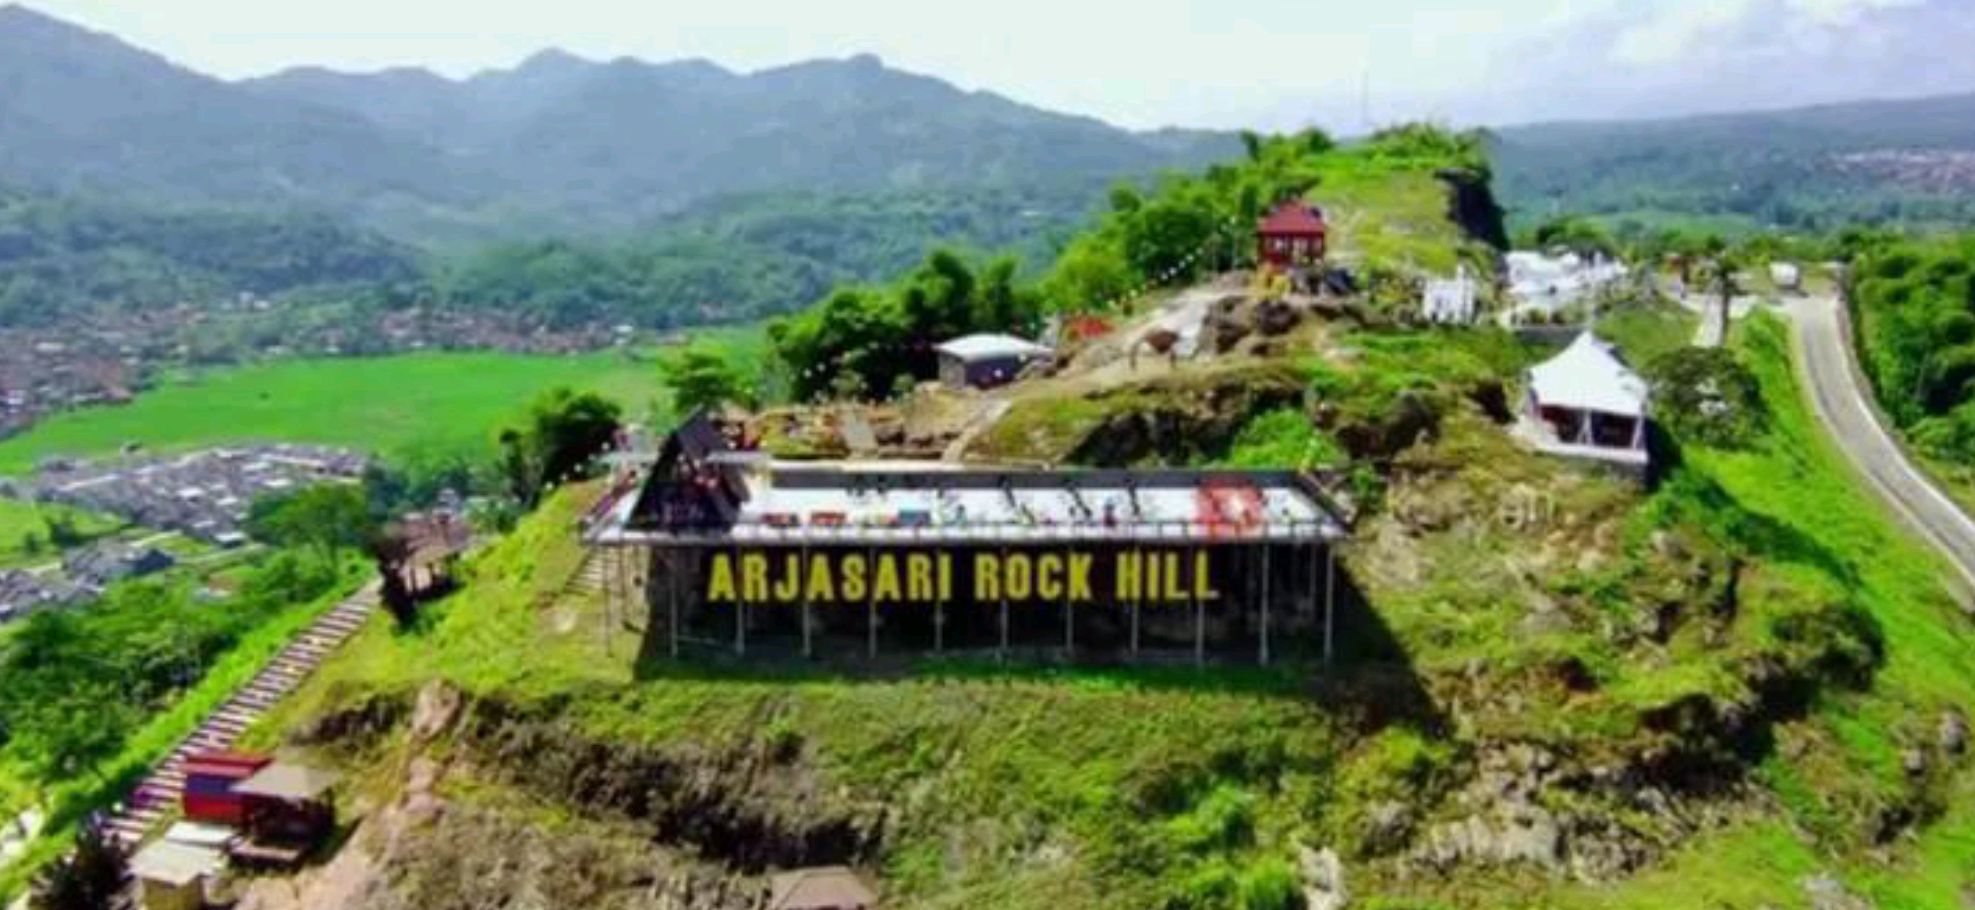 Tempat wisata Arjasari Rock Hill adalah Tempat yang terkenal karena formasi batu-batu besar yang menyerupai bukit. Batu-batu tersebut terbentuk secara alami selama ribuan tahun, menciptakan lanskap yang unik dan menarik.